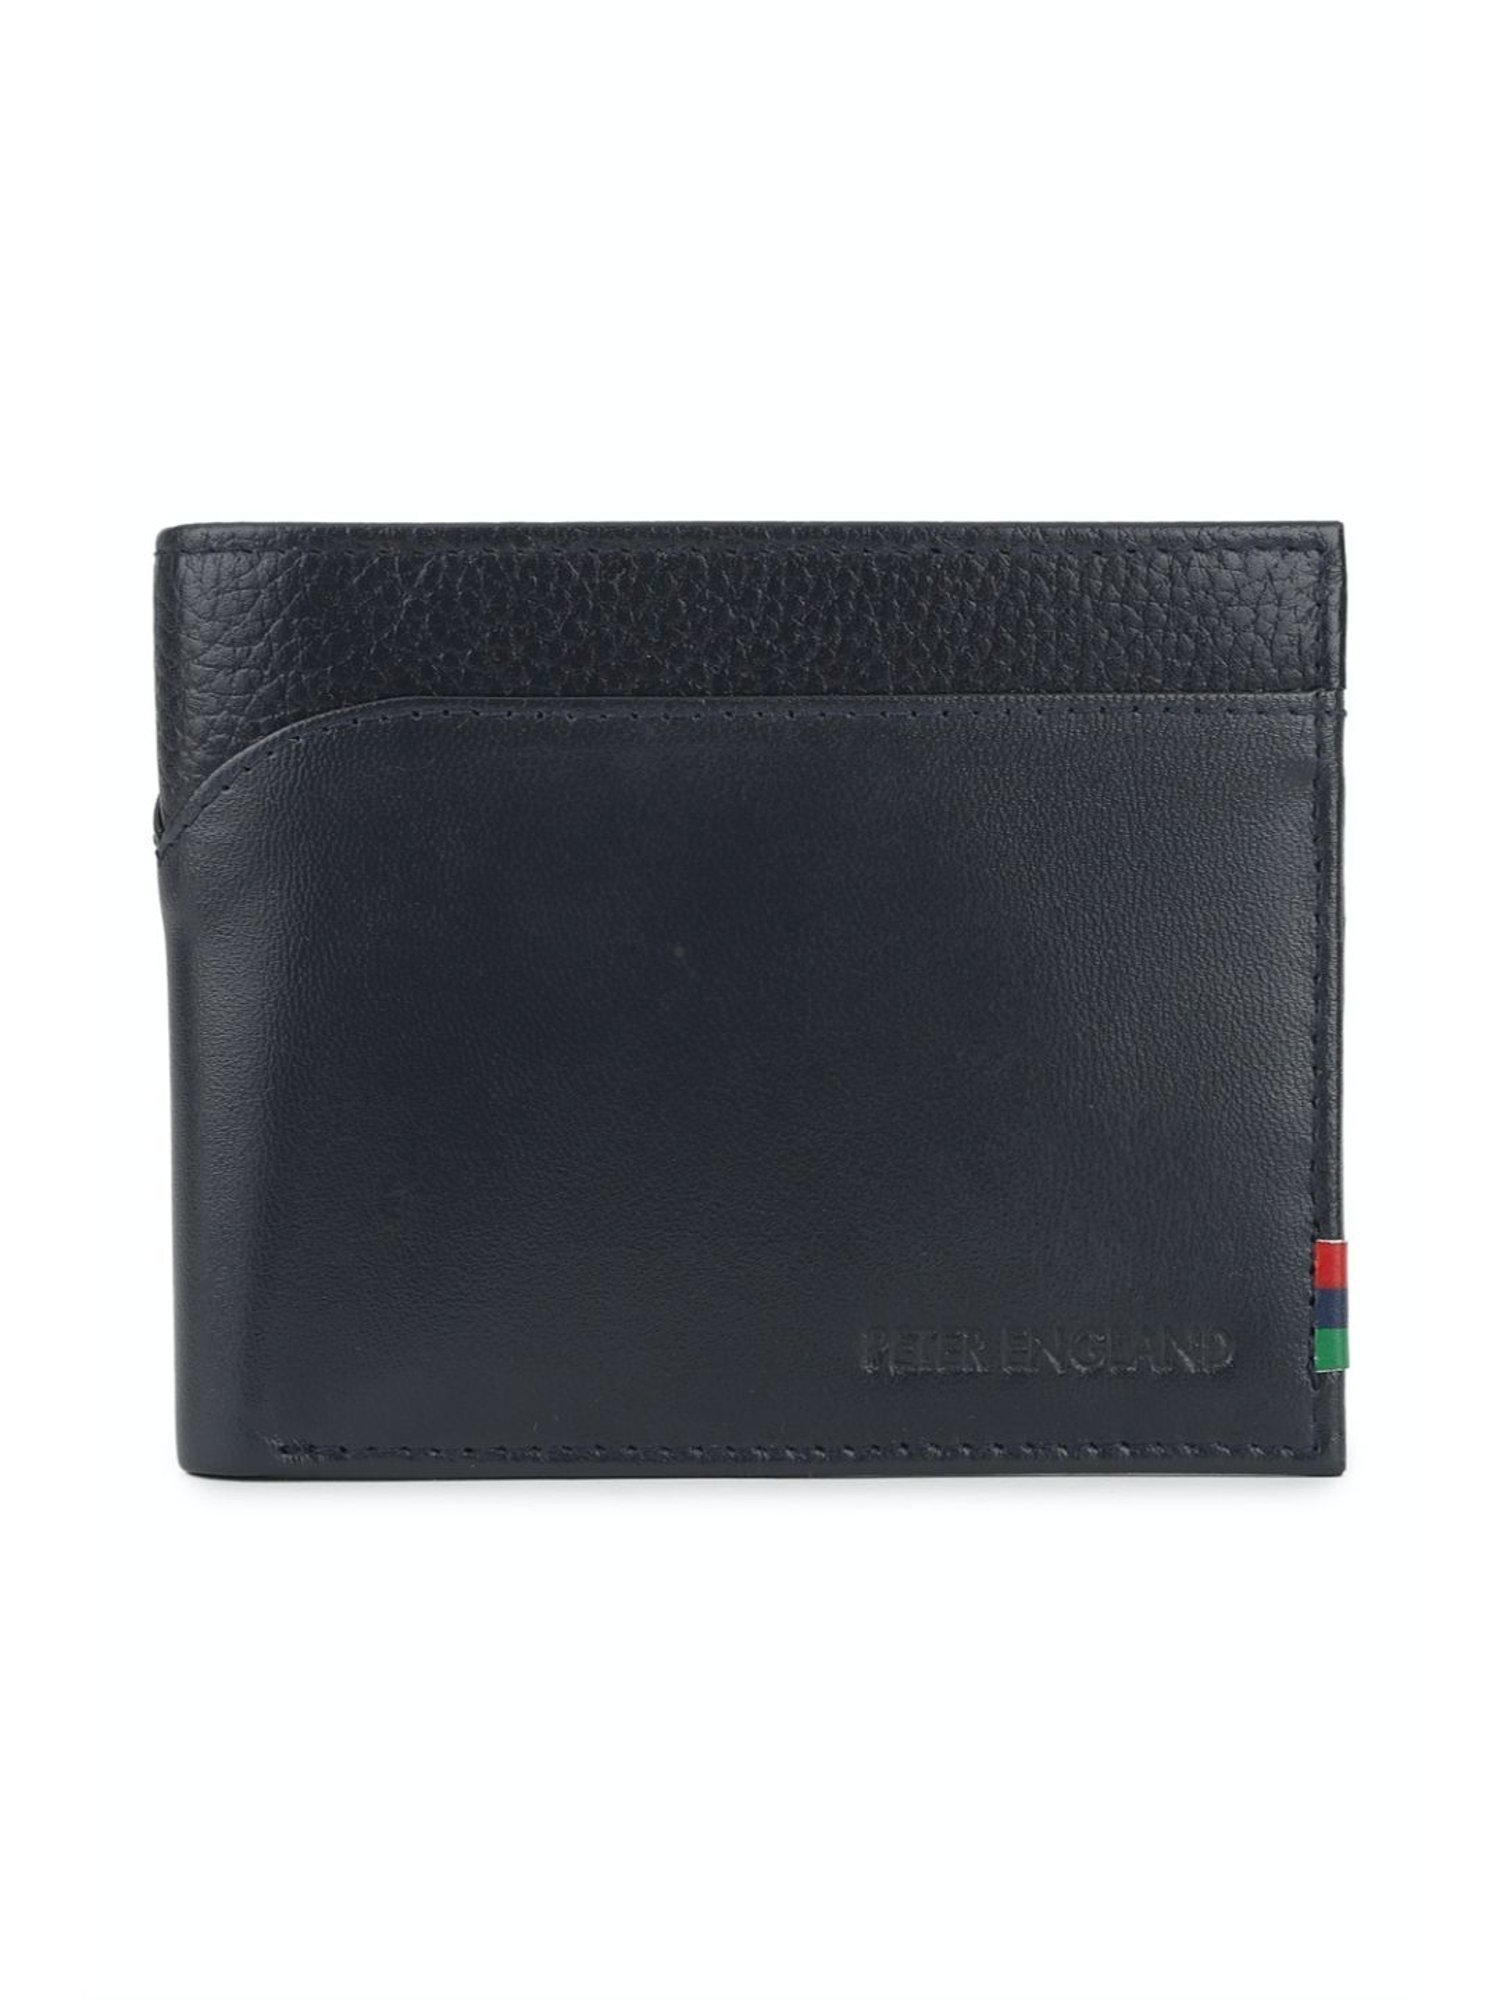 Buy Peter England Solid Black Wallet online